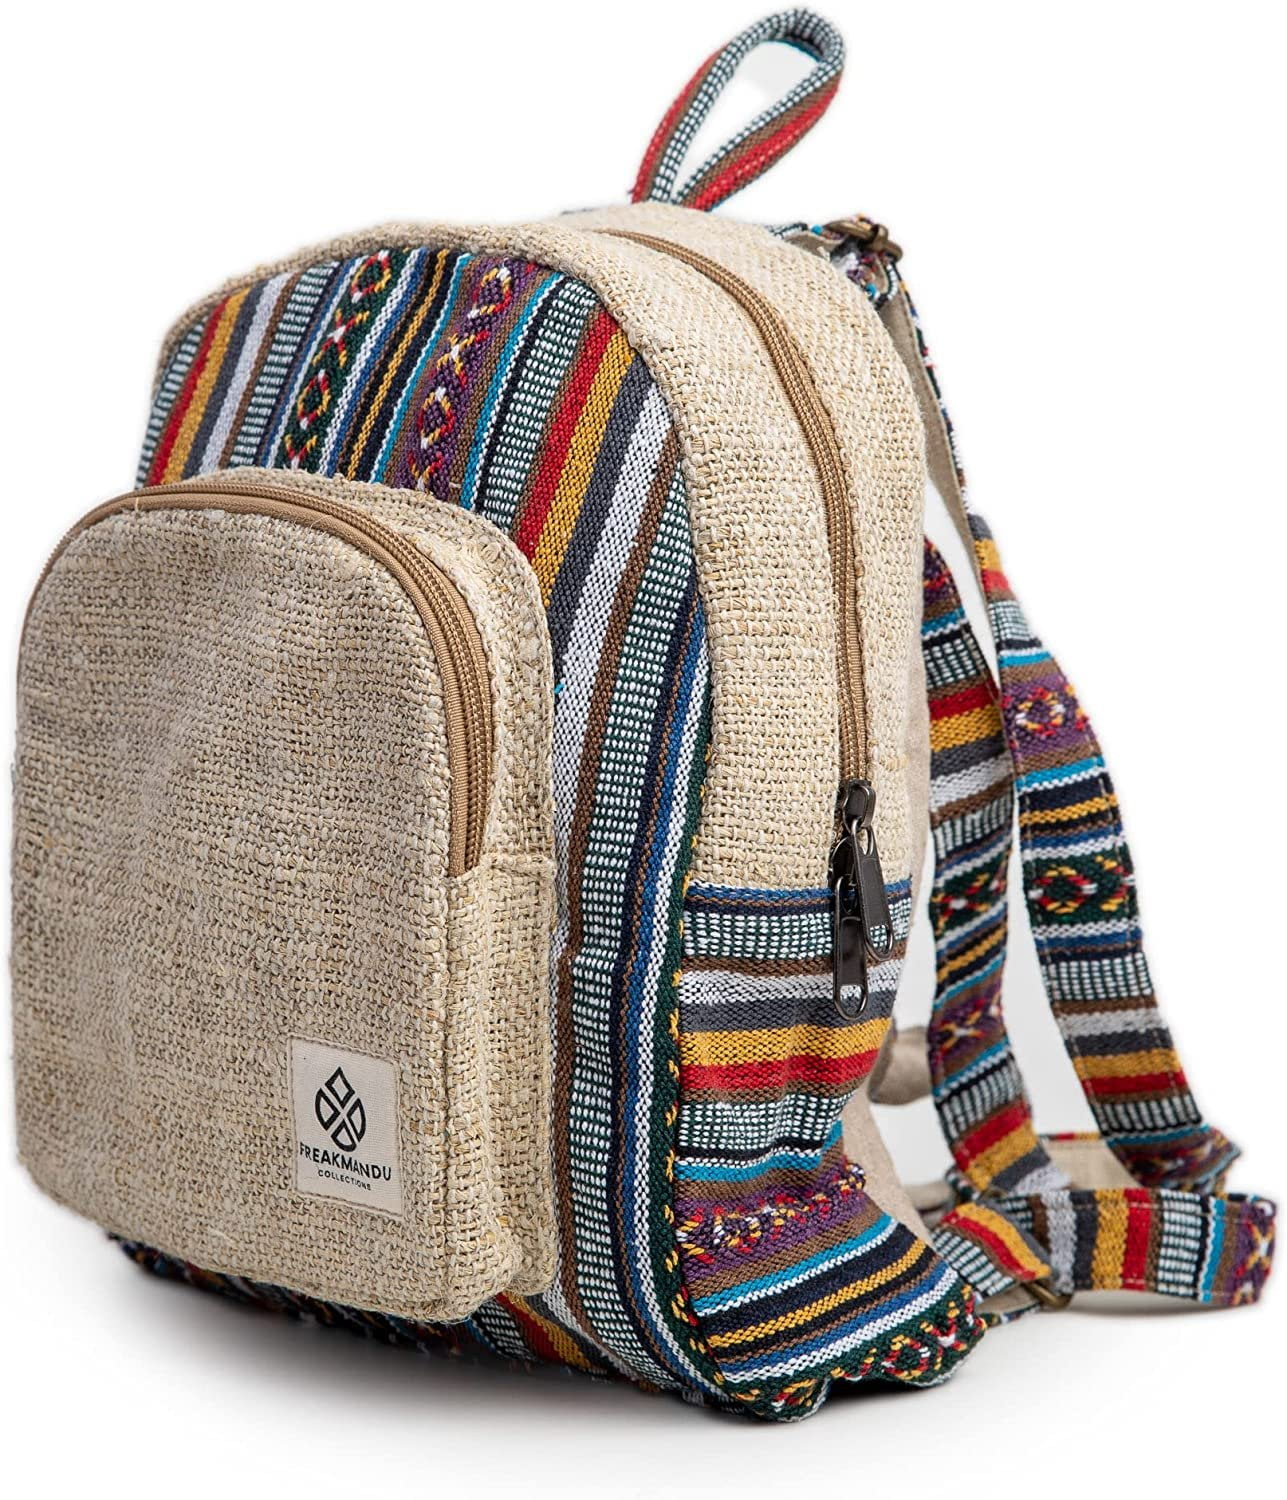 Mini Hemp Backpack Bag - Boho Eco Friendly Unisex Rustic Durable Adjustable  Straps Bag by Freakmandu - Blue